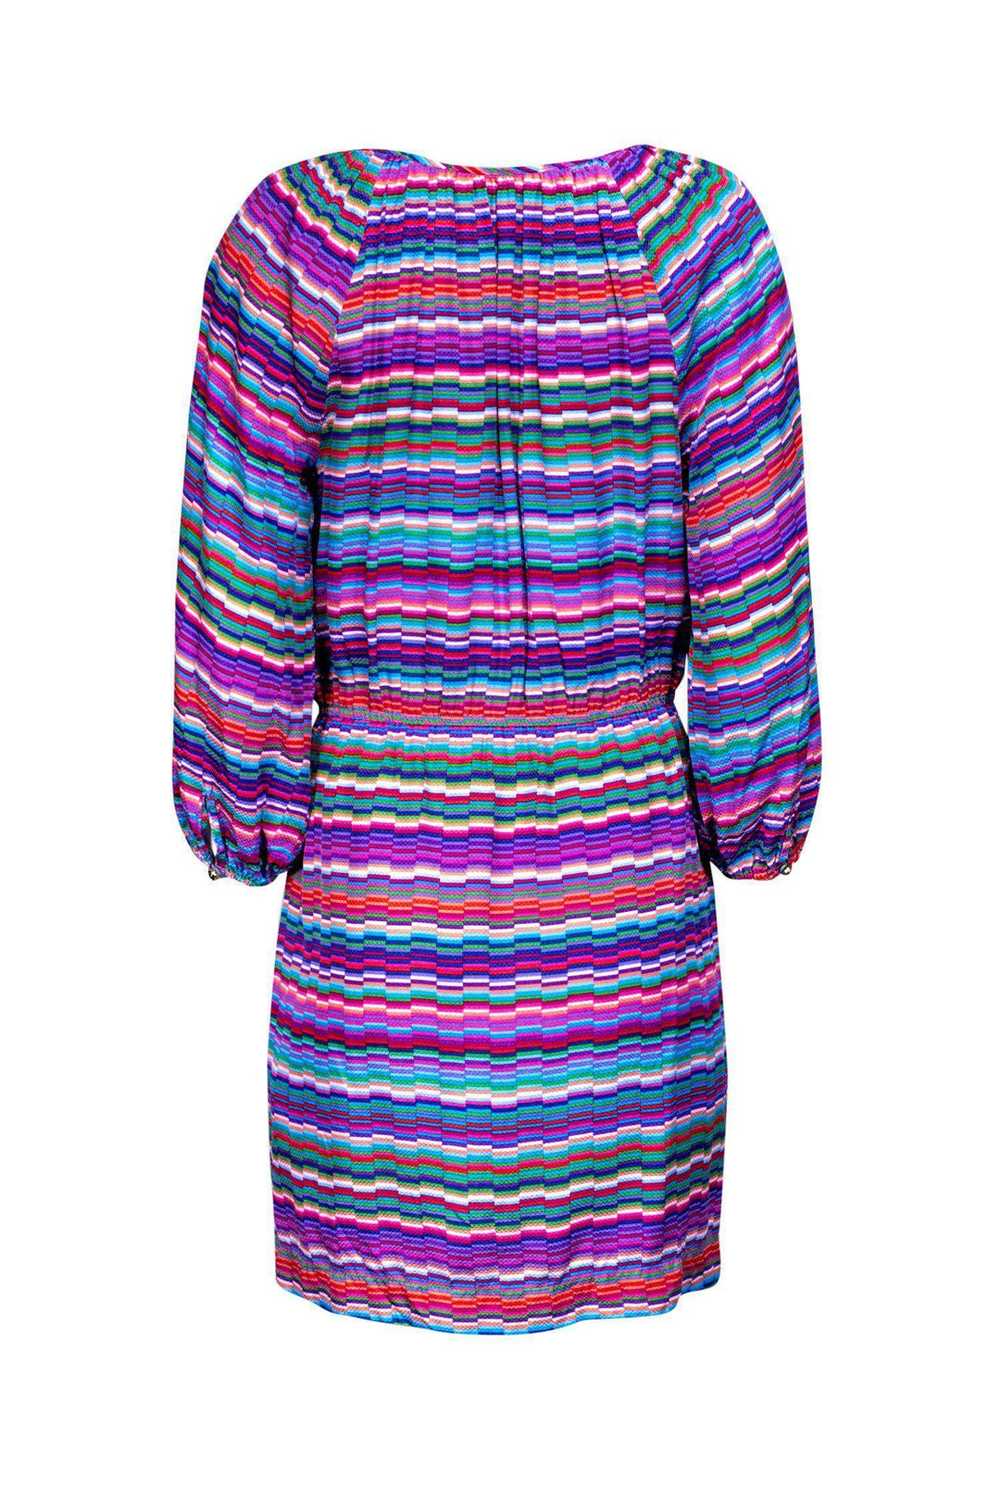 Shoshanna - Multicolored Peasant Top Dress Sz 6 - image 3